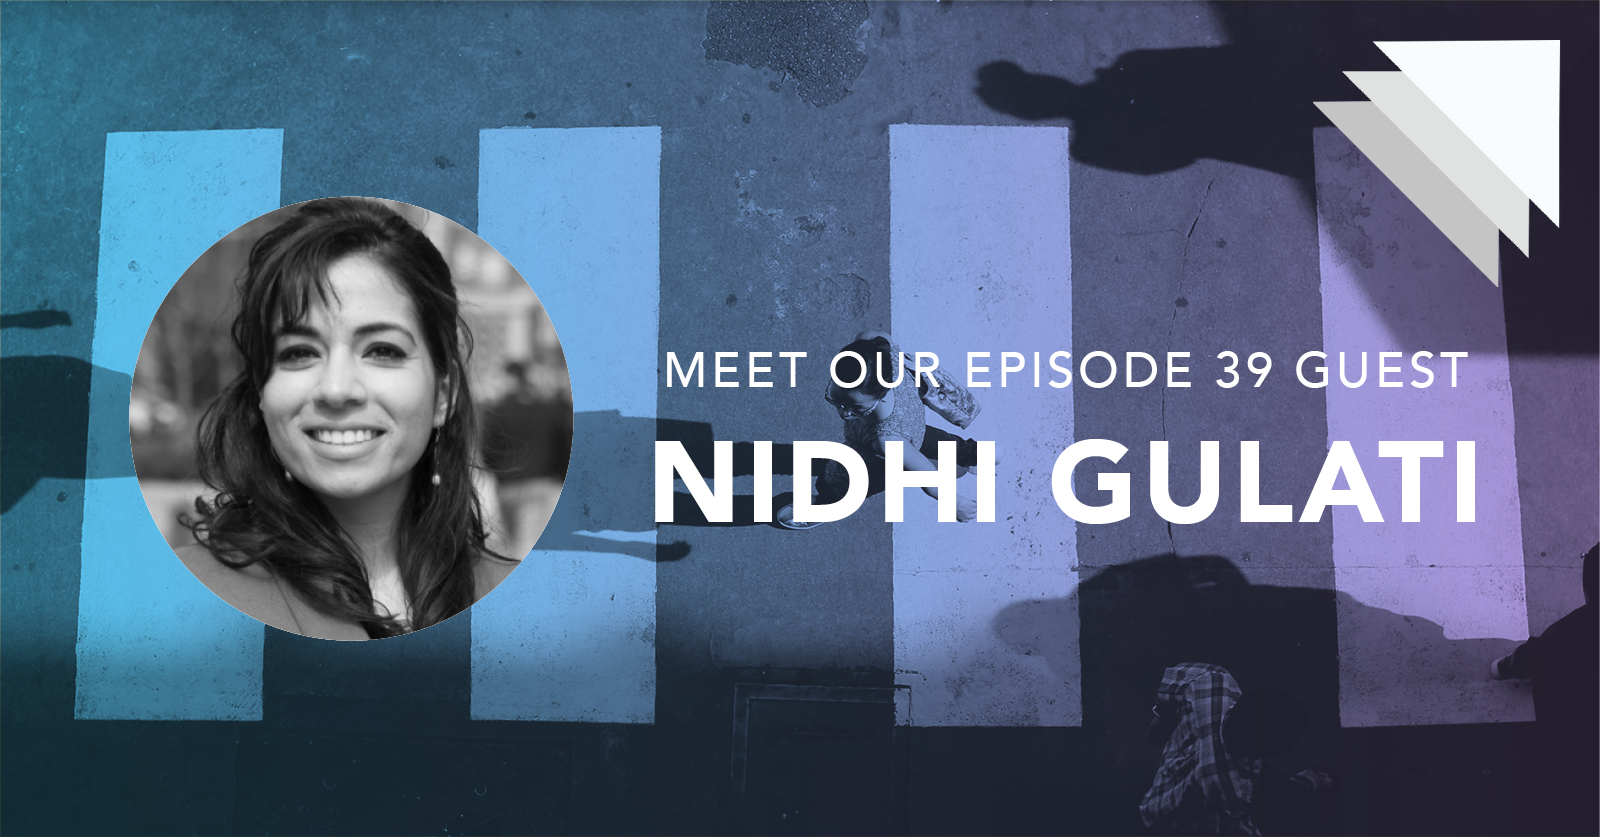 Meet our episode 39 guest Nidhi Gulati